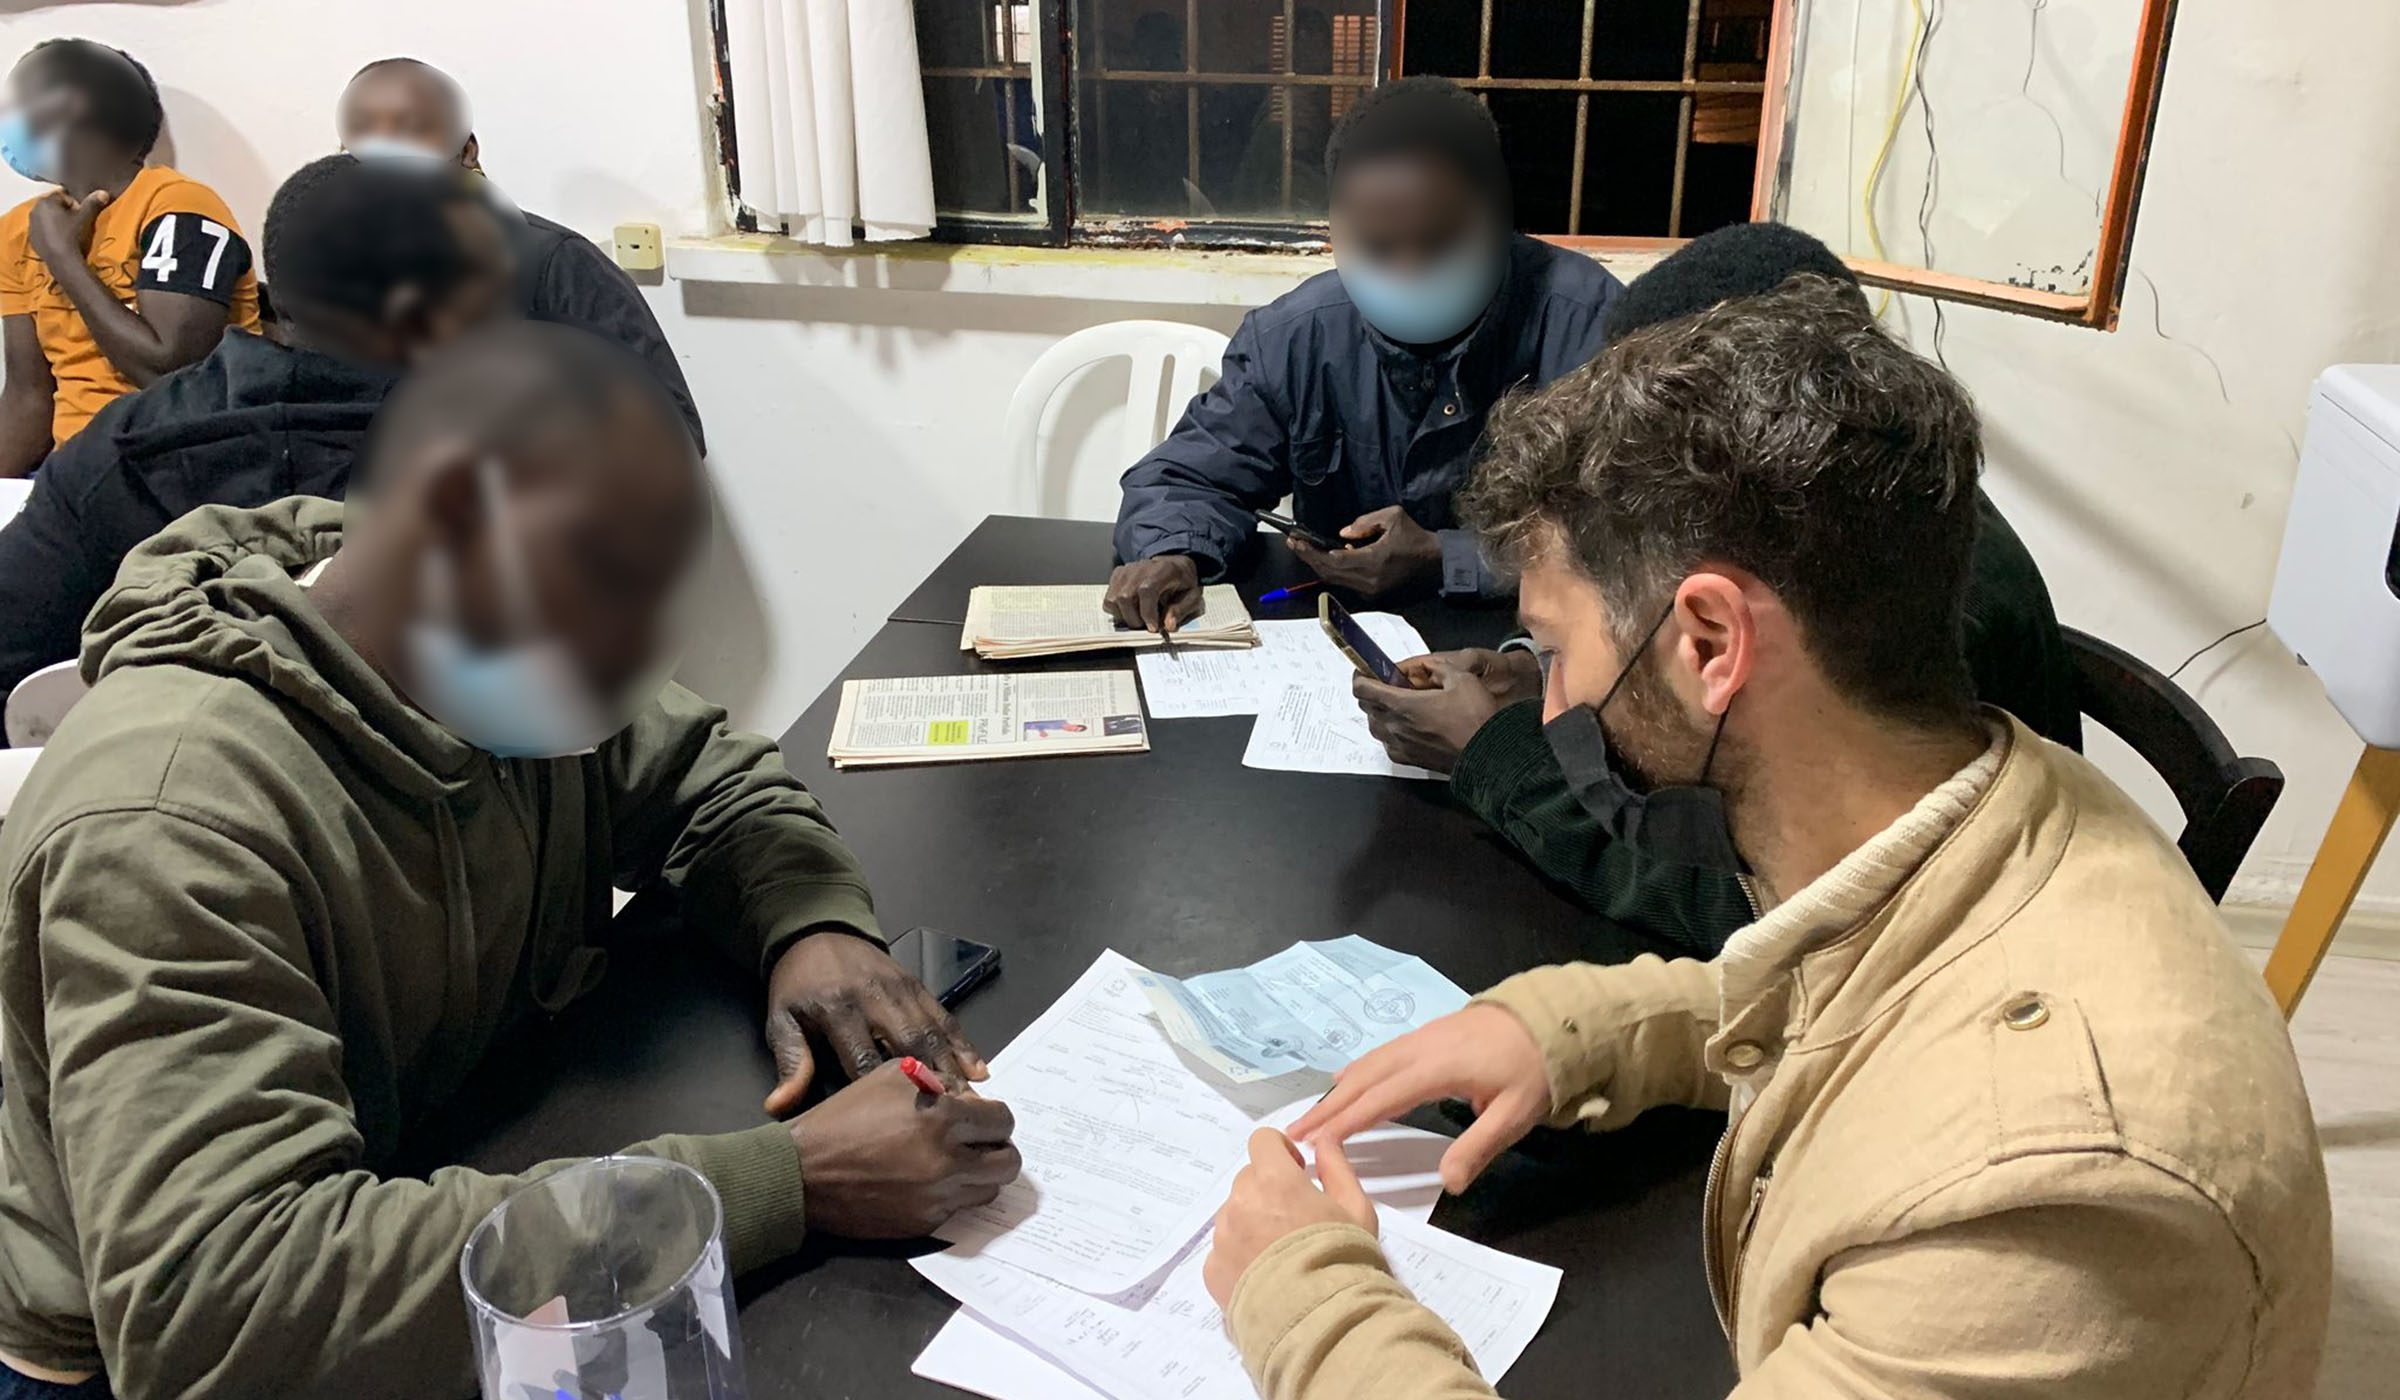 HIAS Israel's deputy director Nimrod Avigal (R) helps a Sudanese asylum seeker fill out forms to get temporary residency status. January 2021. (HIAS Israel)